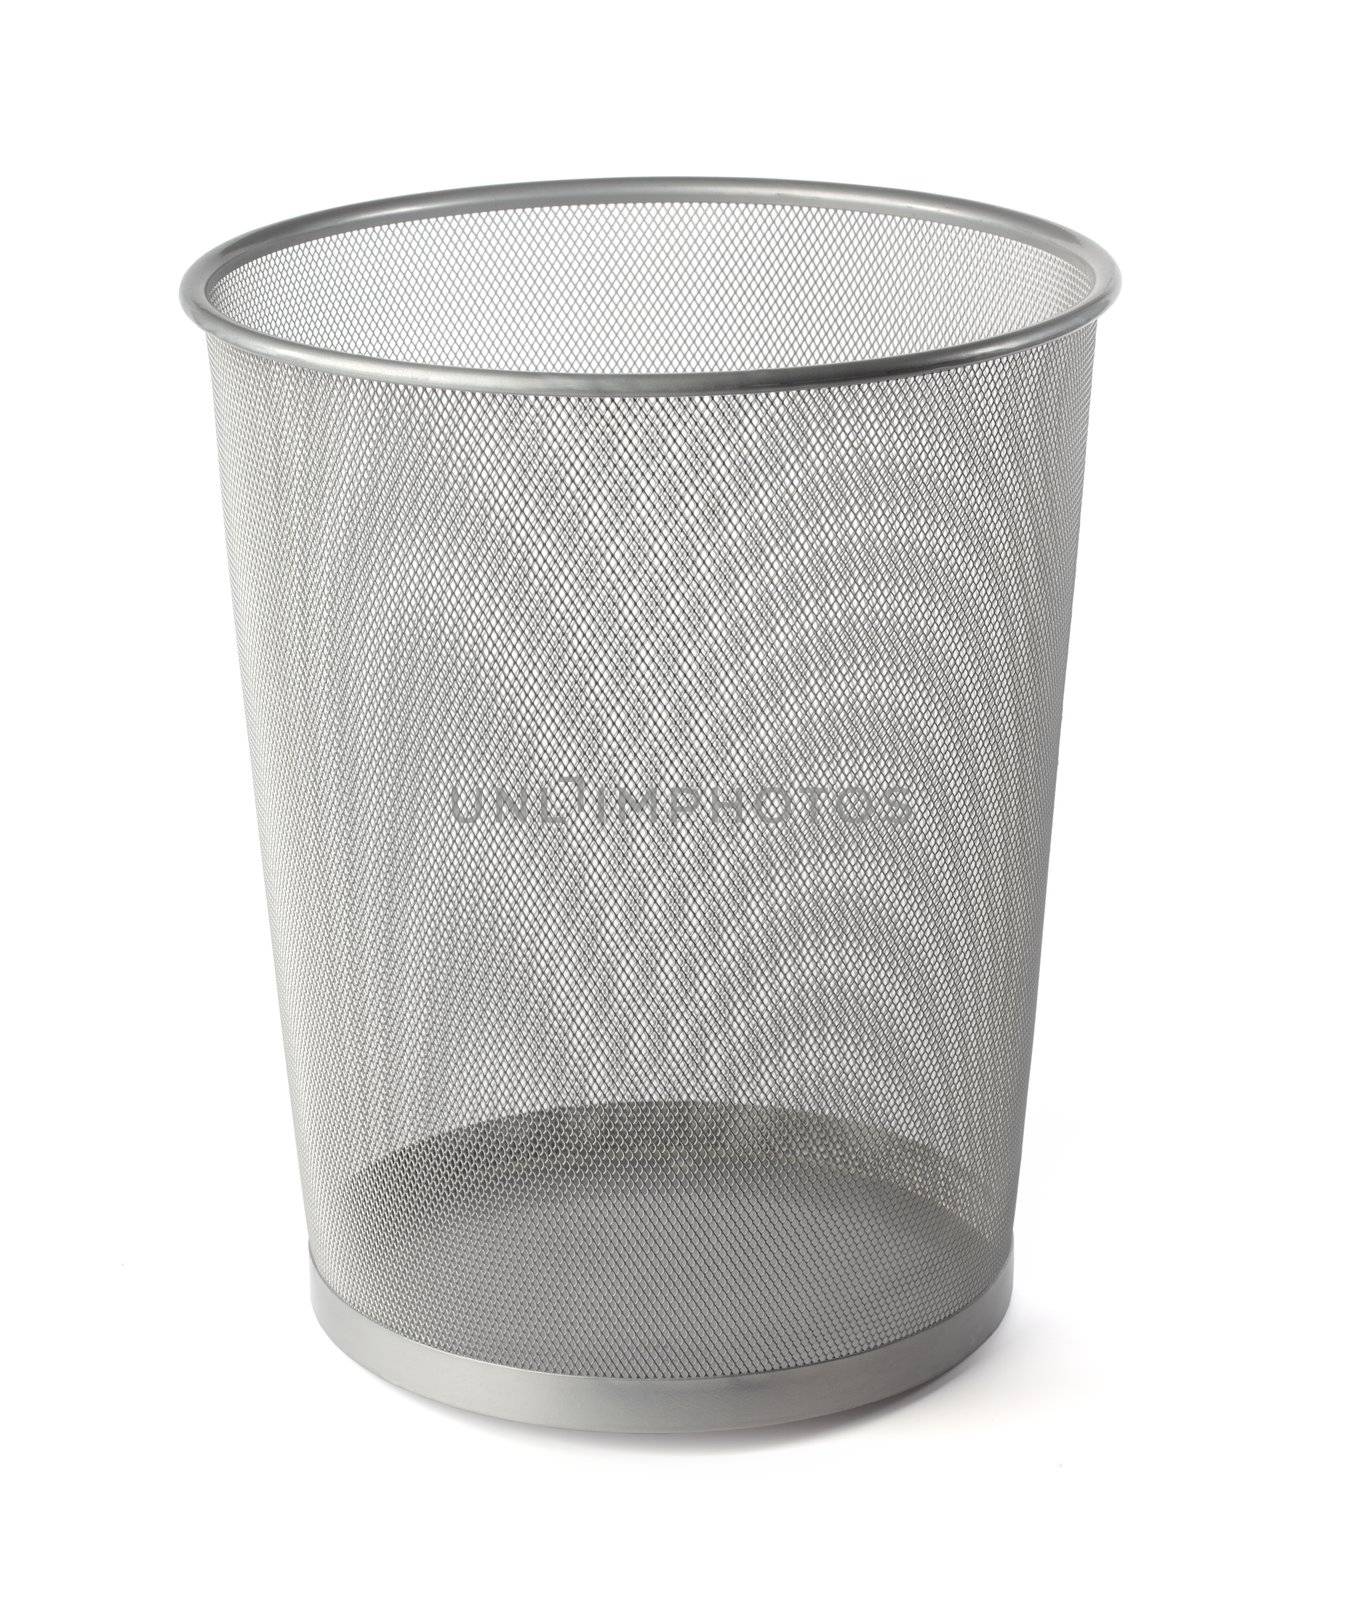 Empty grey metallic mesh waste basket on white